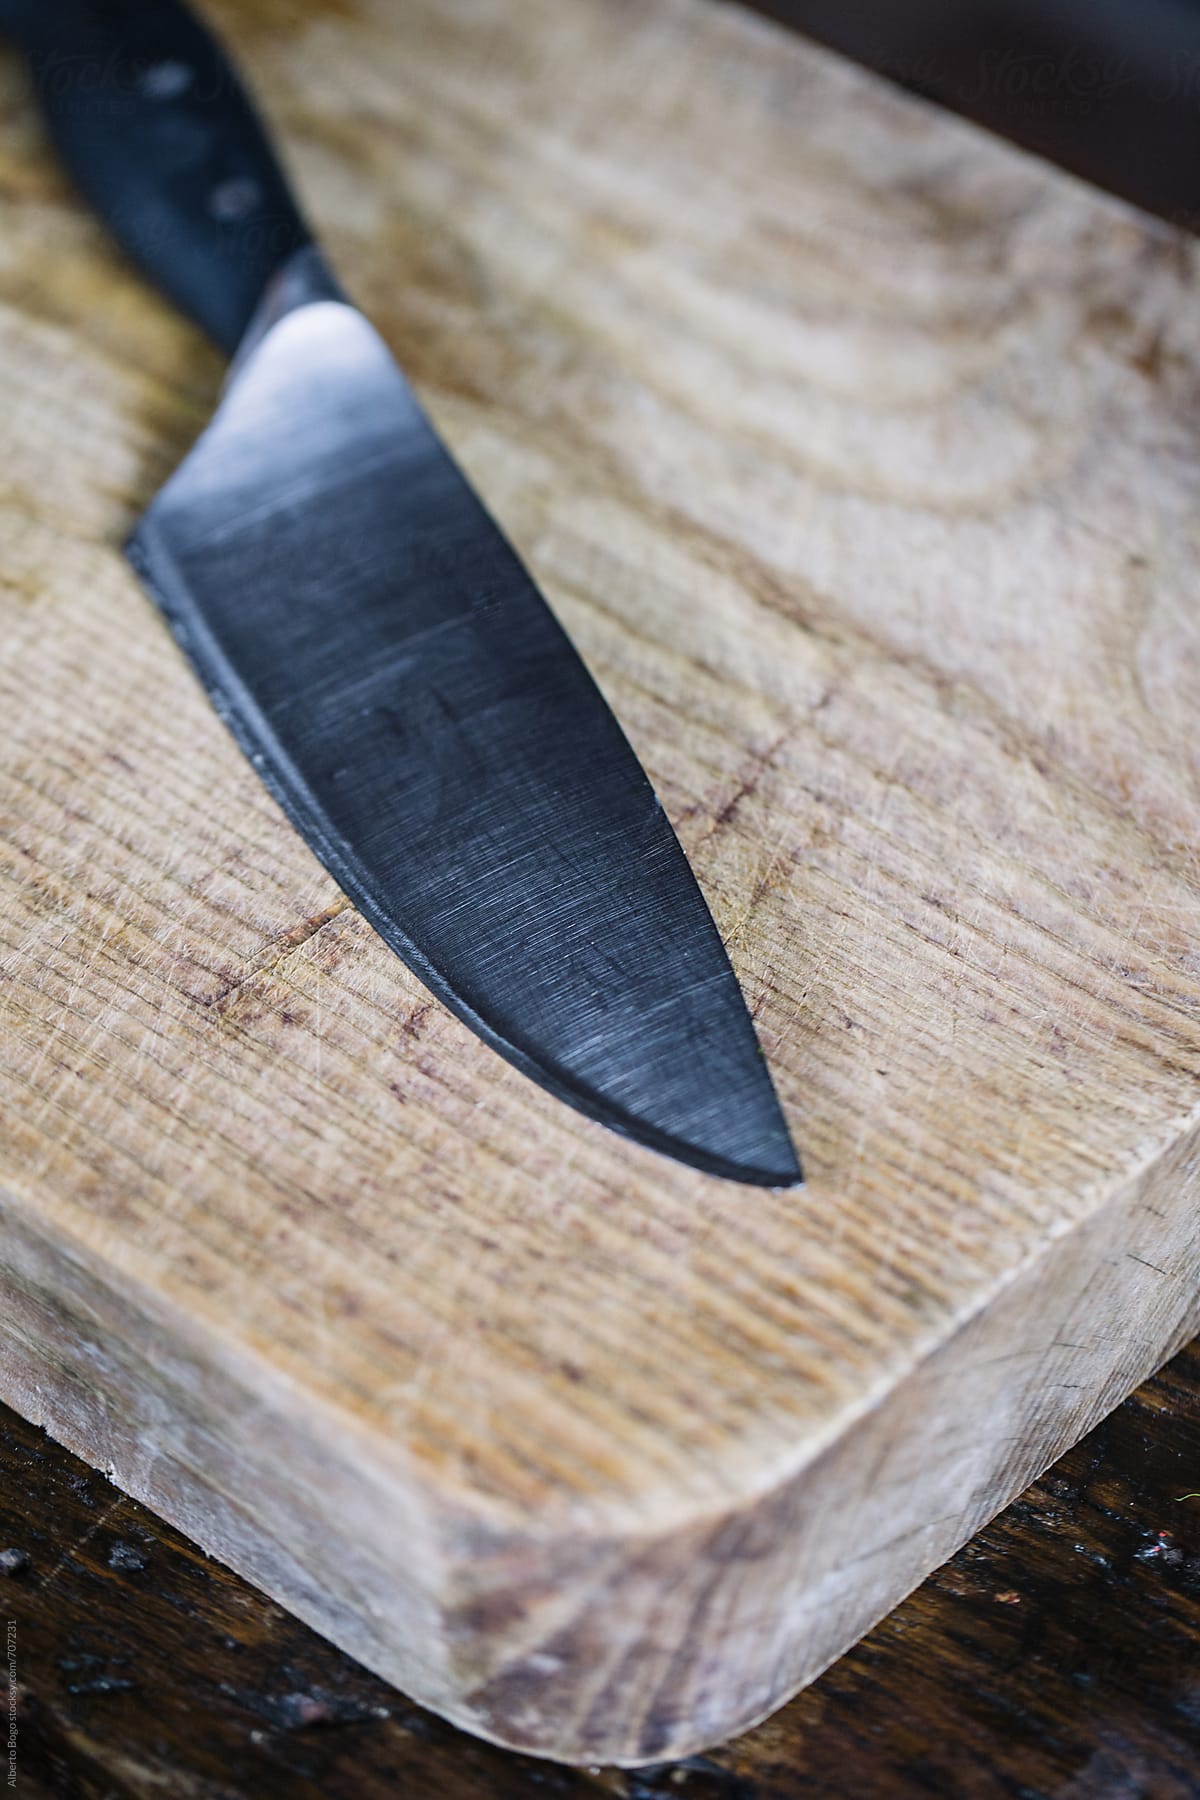 Knife on wooden cutting board